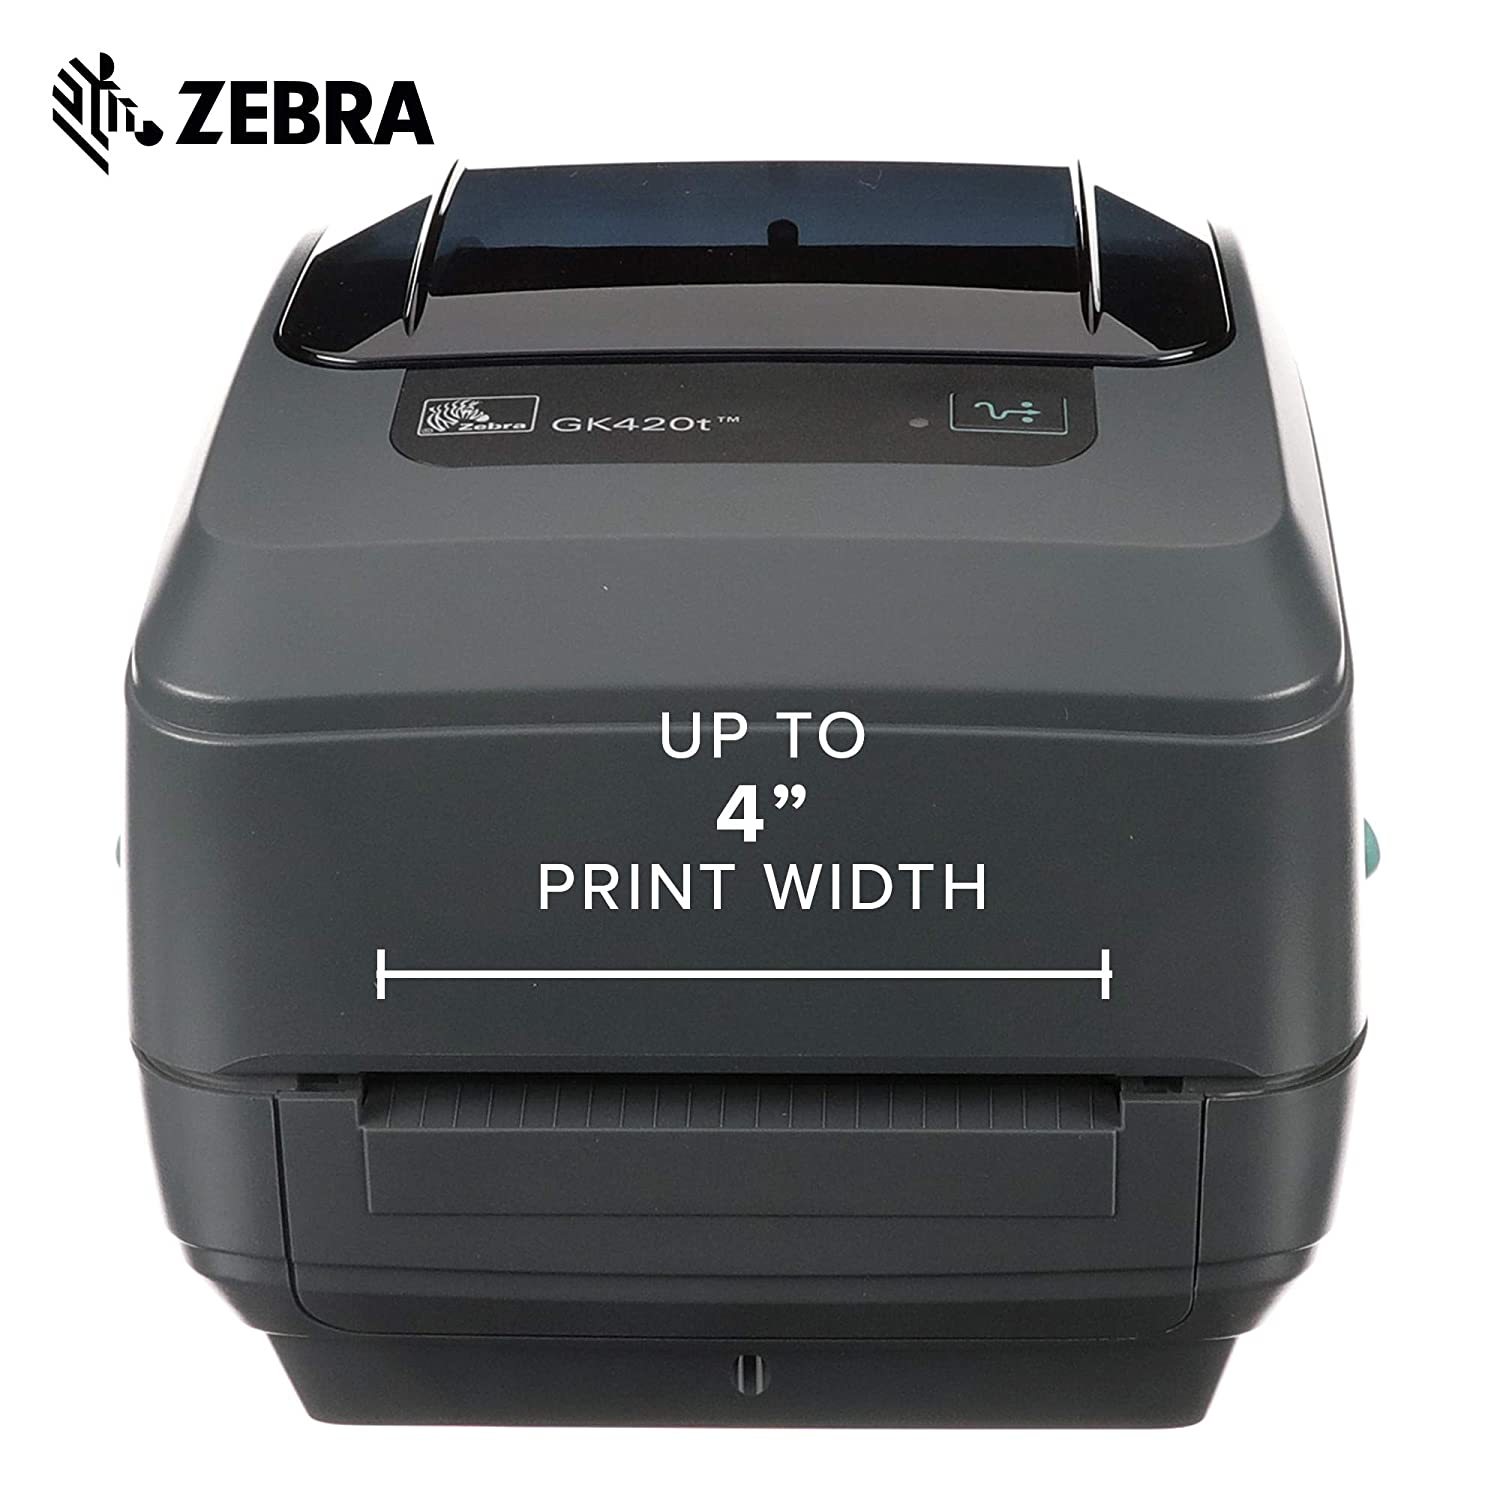 Zebra G Series Gk420t Thermal Monochrome Label Printer Gk42 102510 000 Printers 0653